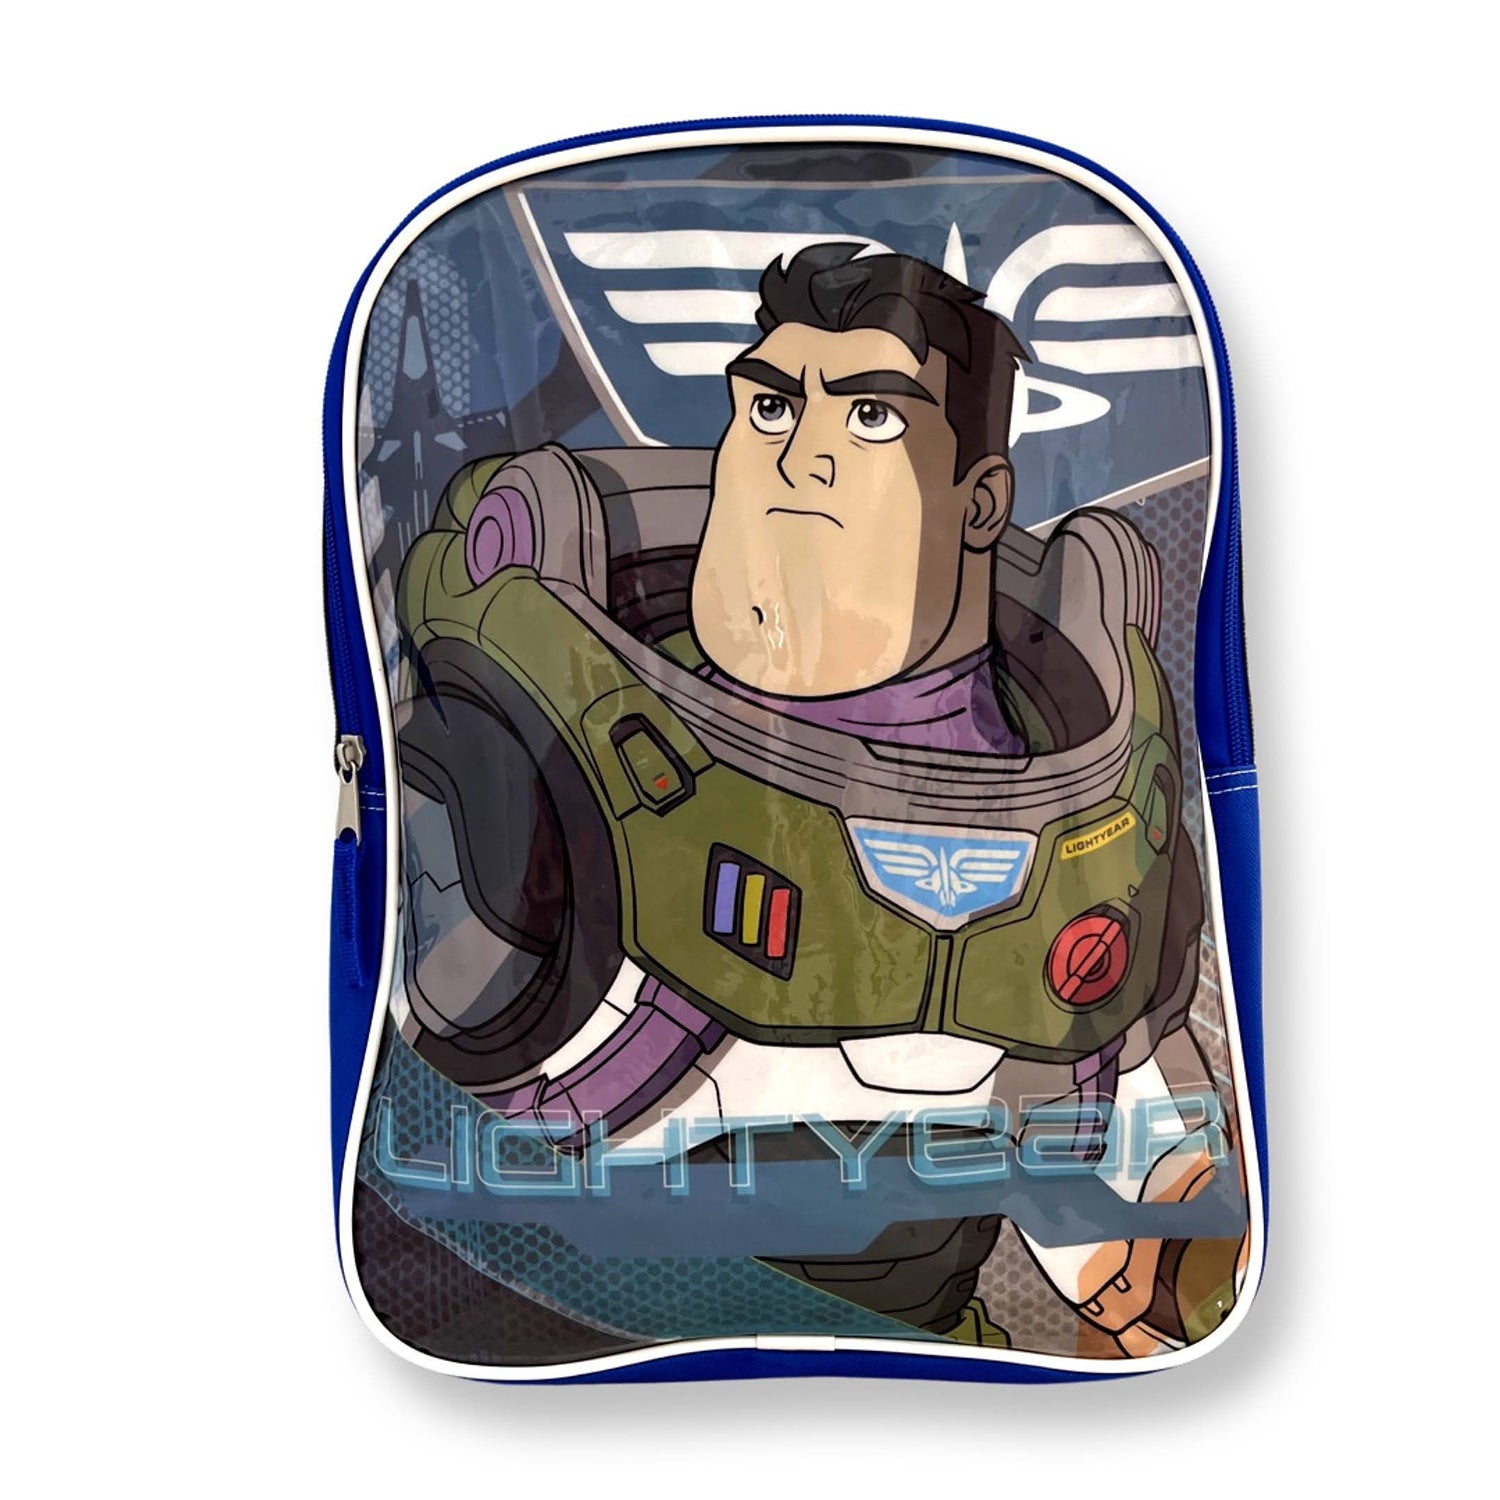 Buzz Lightyear 15 Inch Backpack